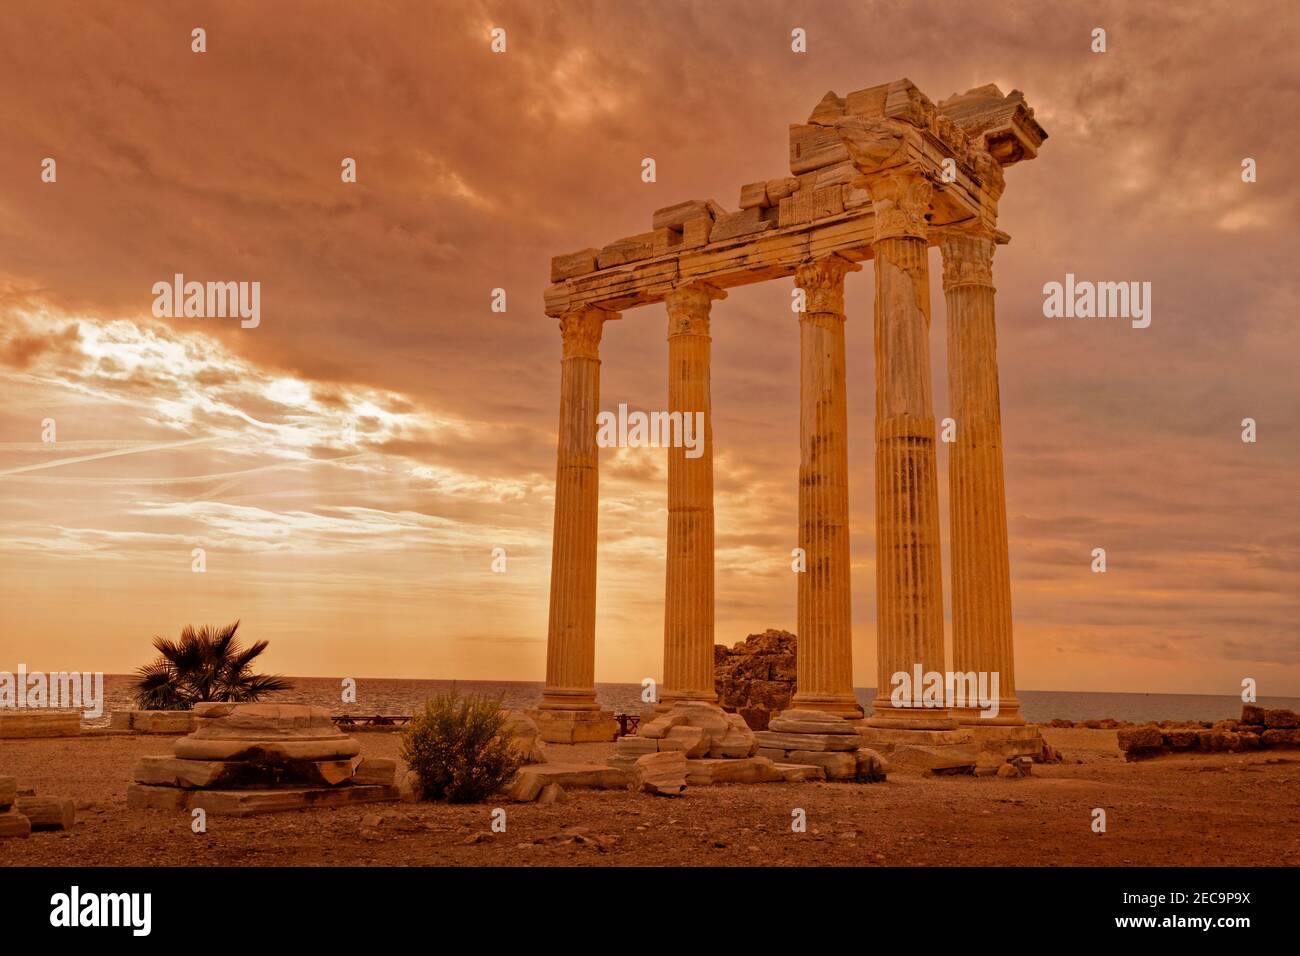 Temple of Apollo at Side, Antalya Province, Turkey. Stock Photo